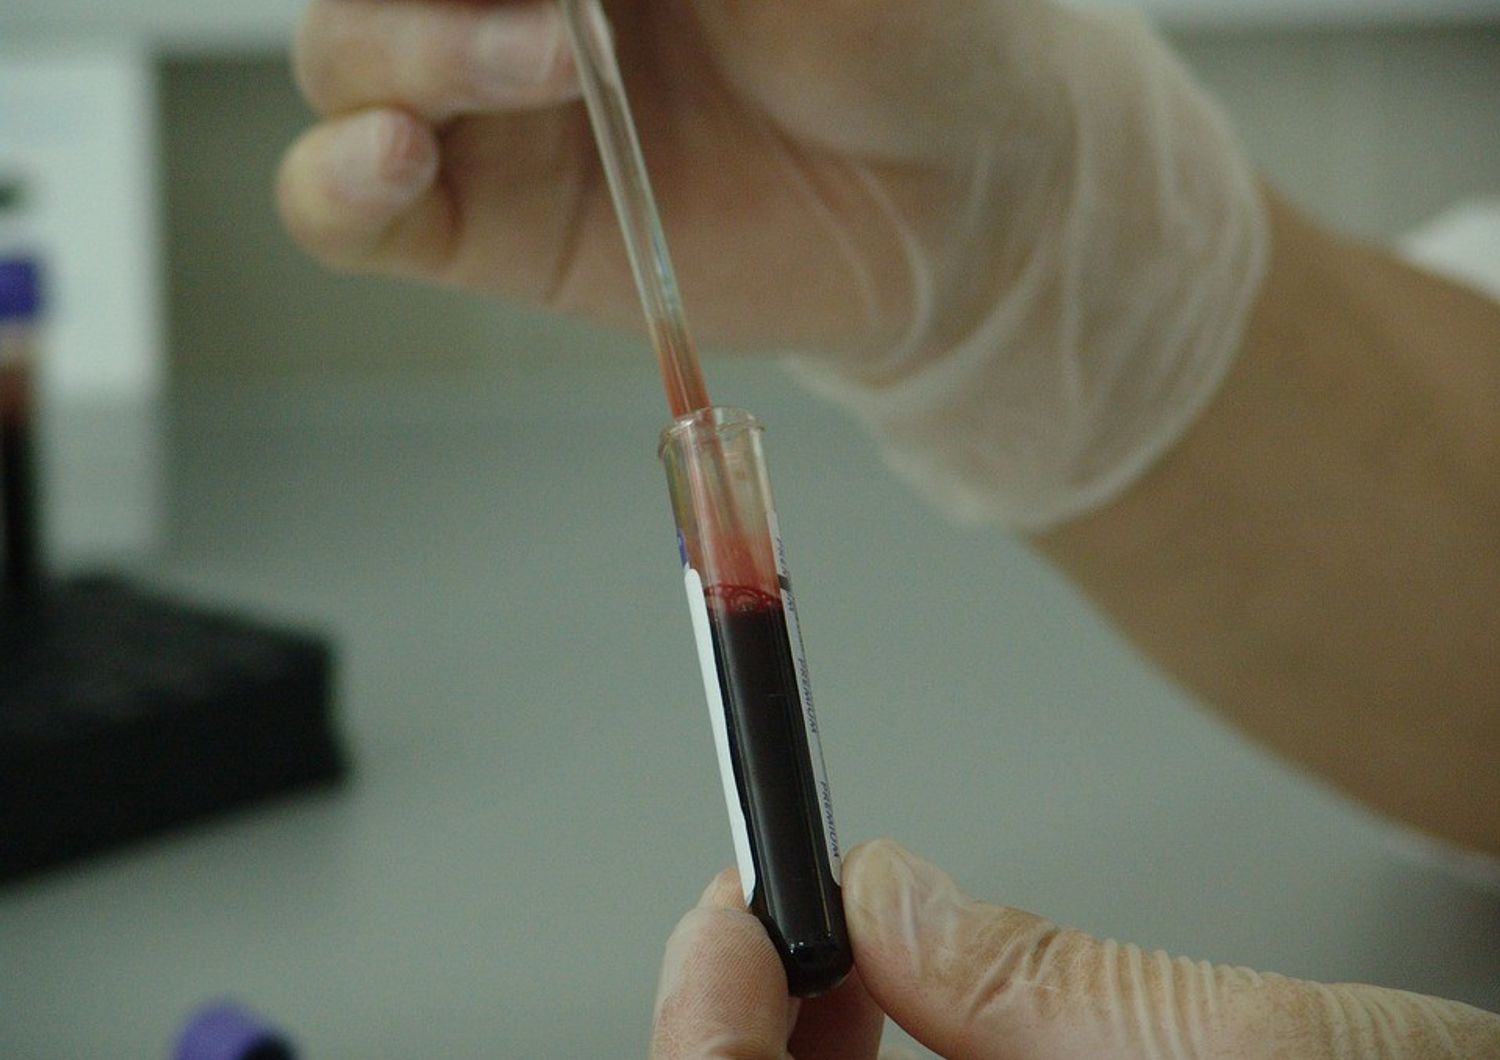 &nbsp; ricerca ricercatori sangue provette analisi campione medicina - pixabay